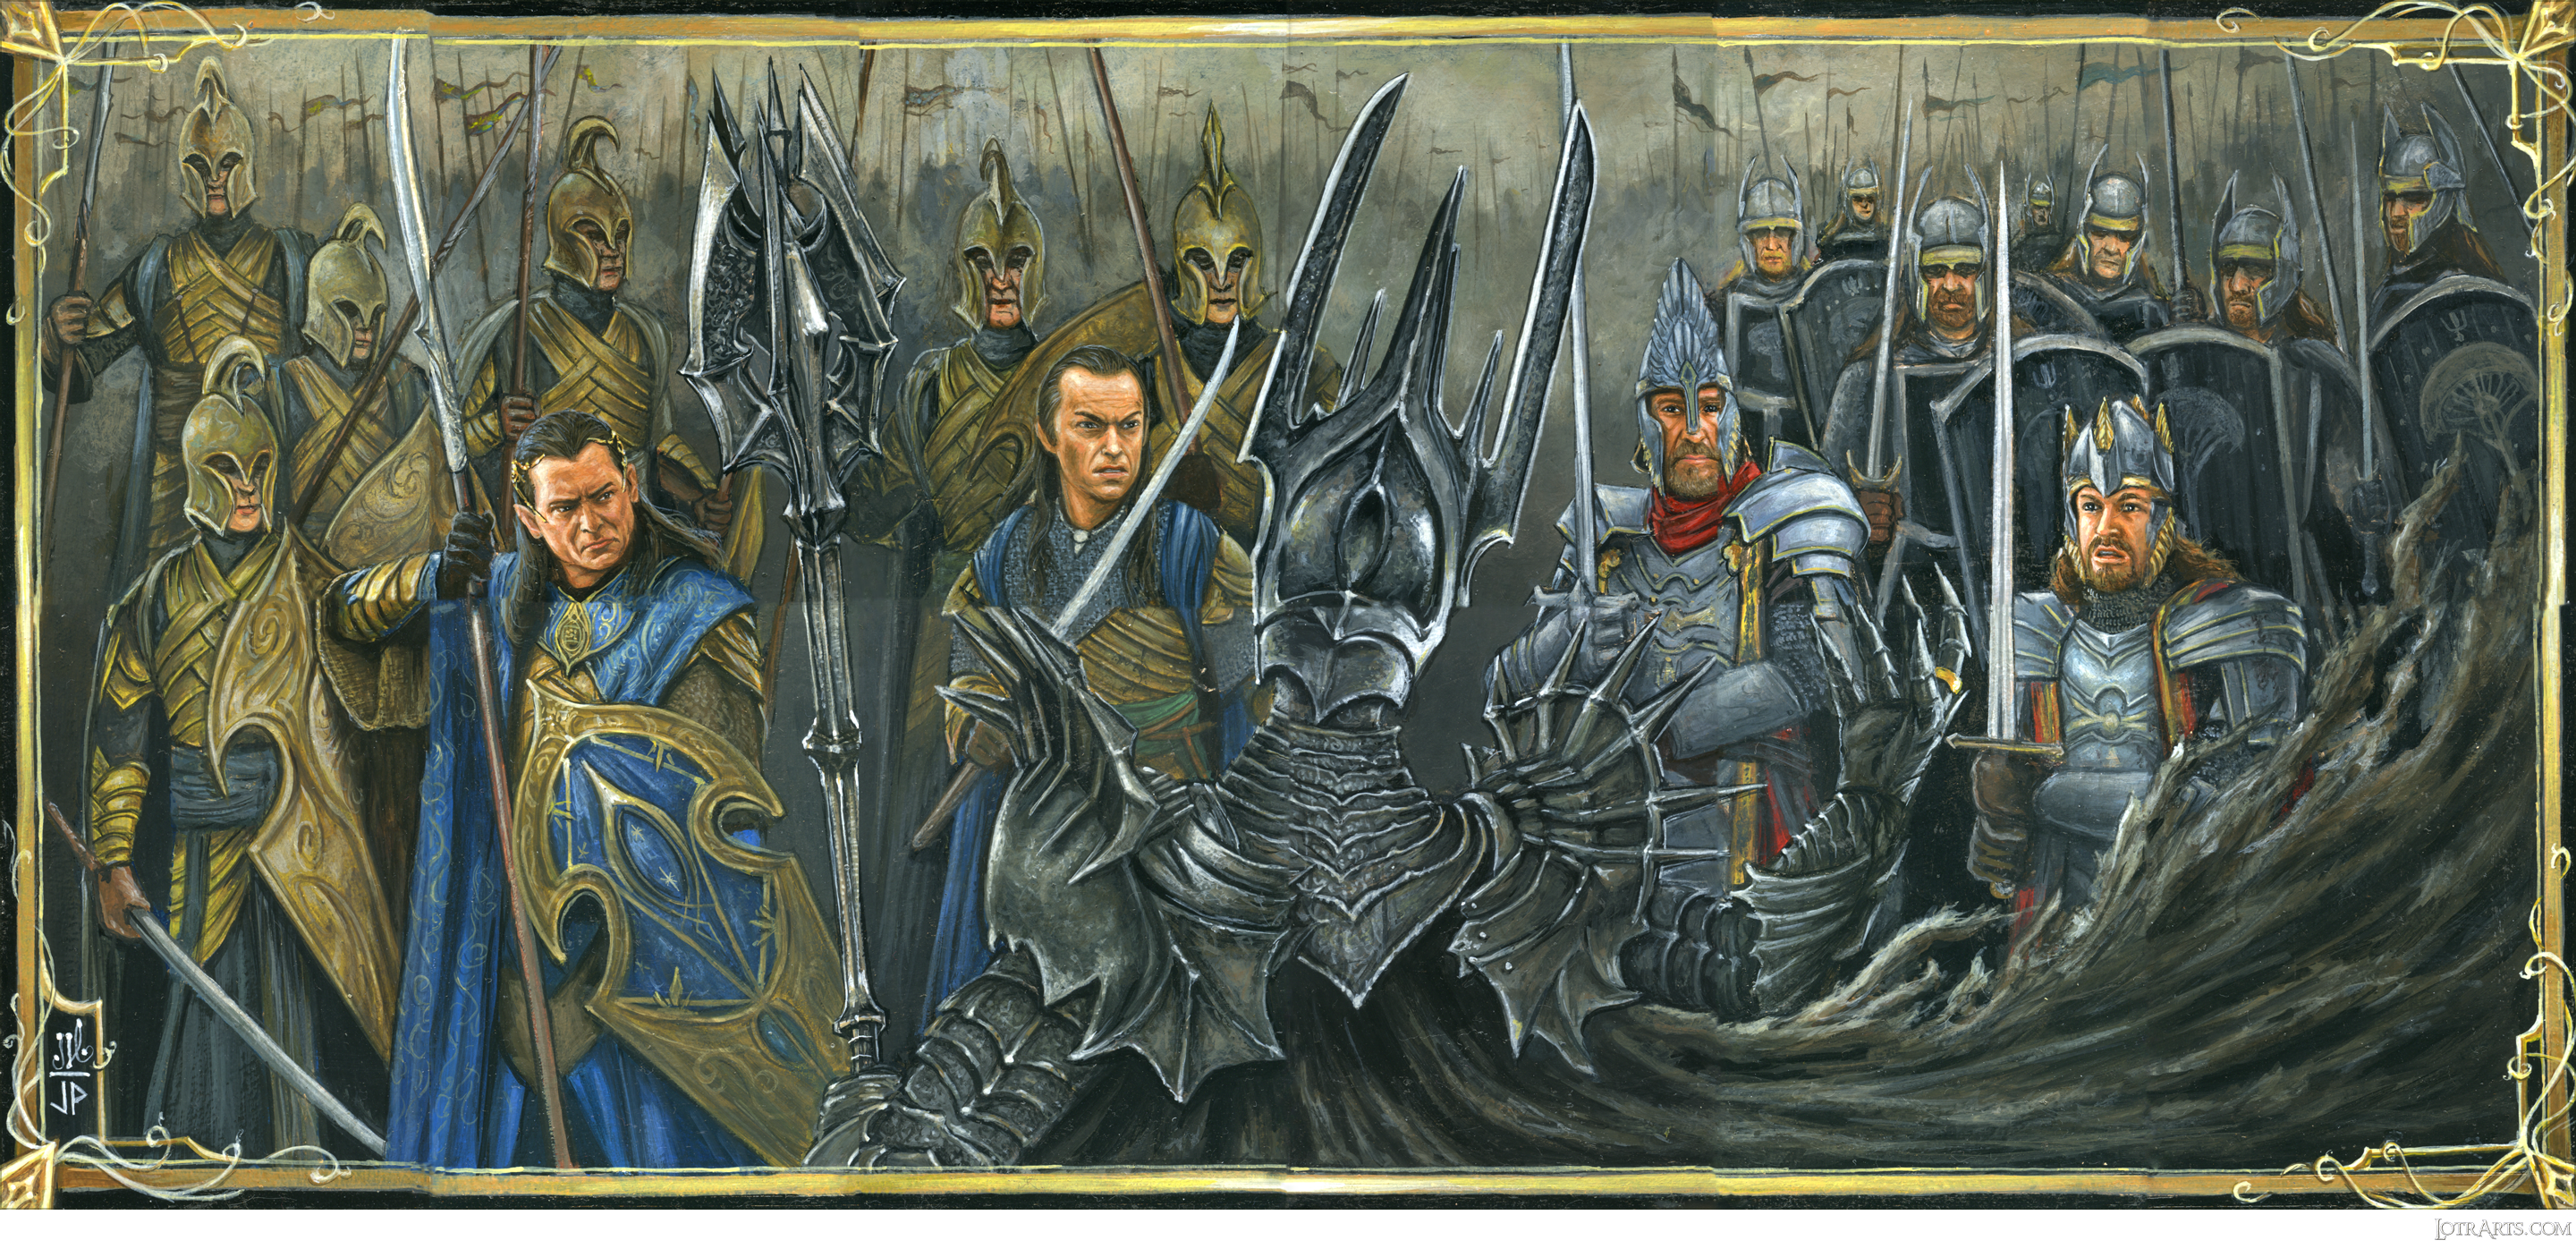 Twelve-card panel of the Last Alliance battling Sauron by Potratz and Hai<span class="ngViews">16 views</span>